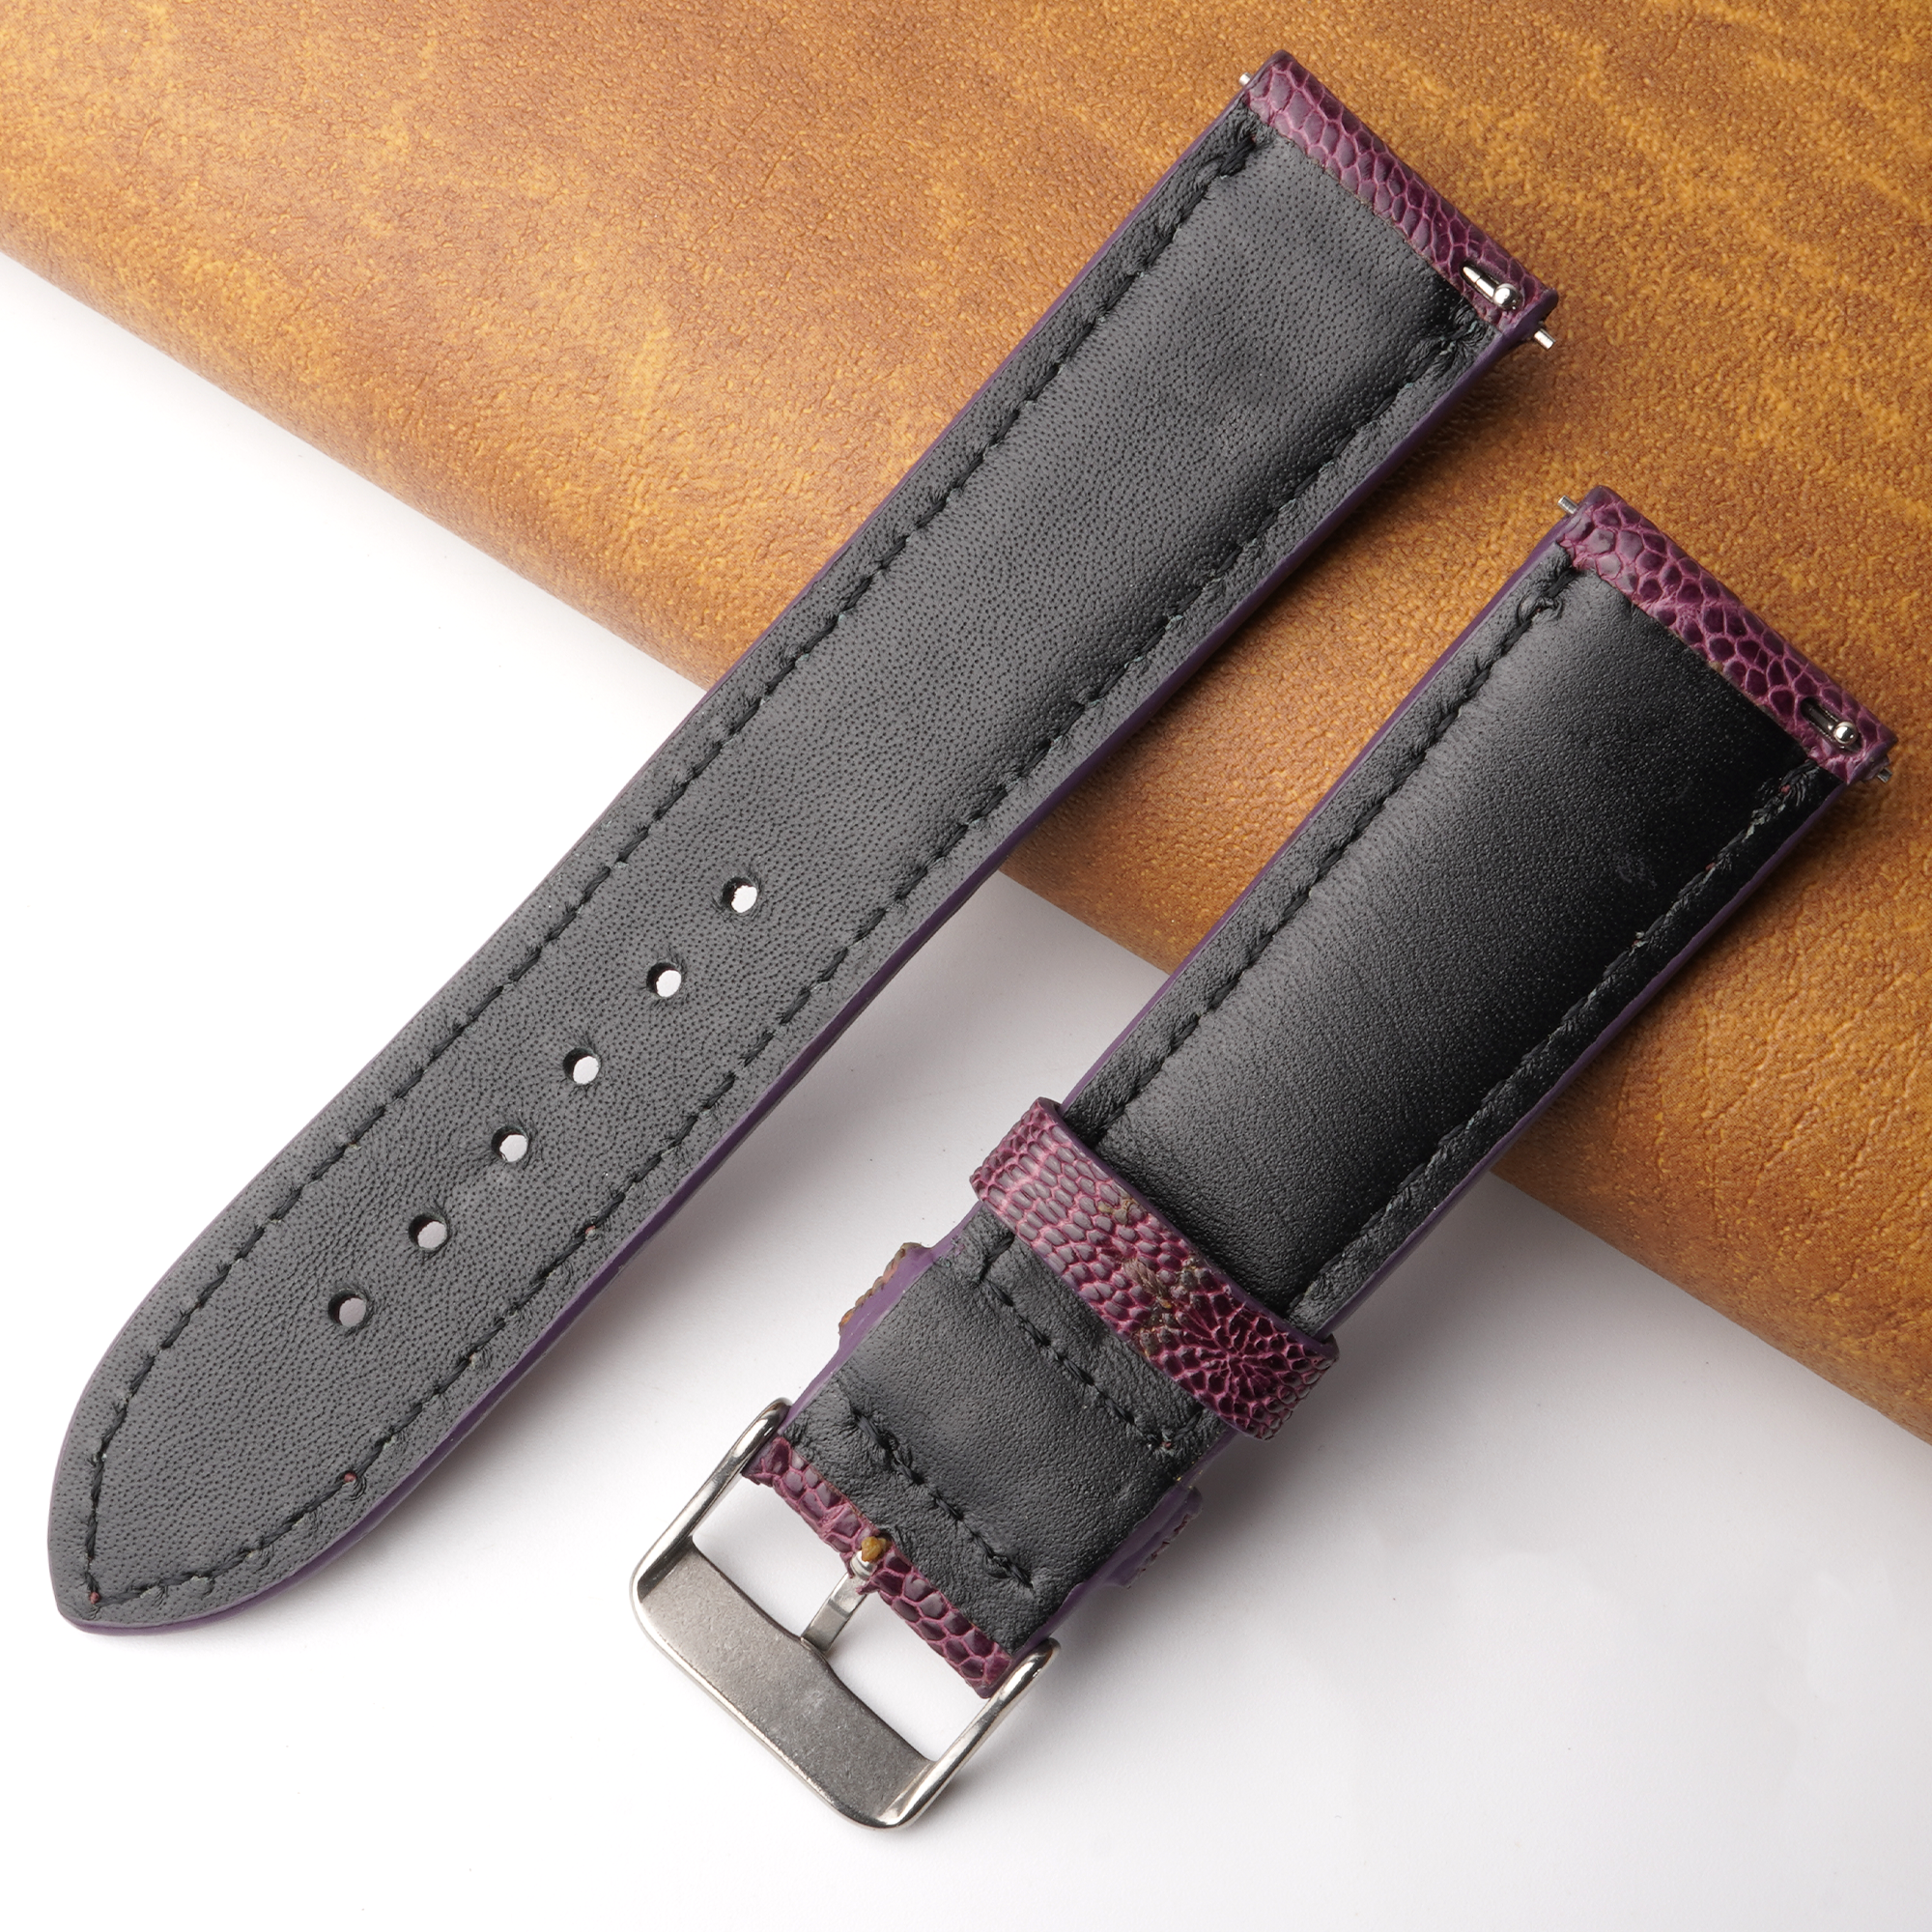 22mm Purple Unique Ostrich Leather Watch Band For Men | DH-170S